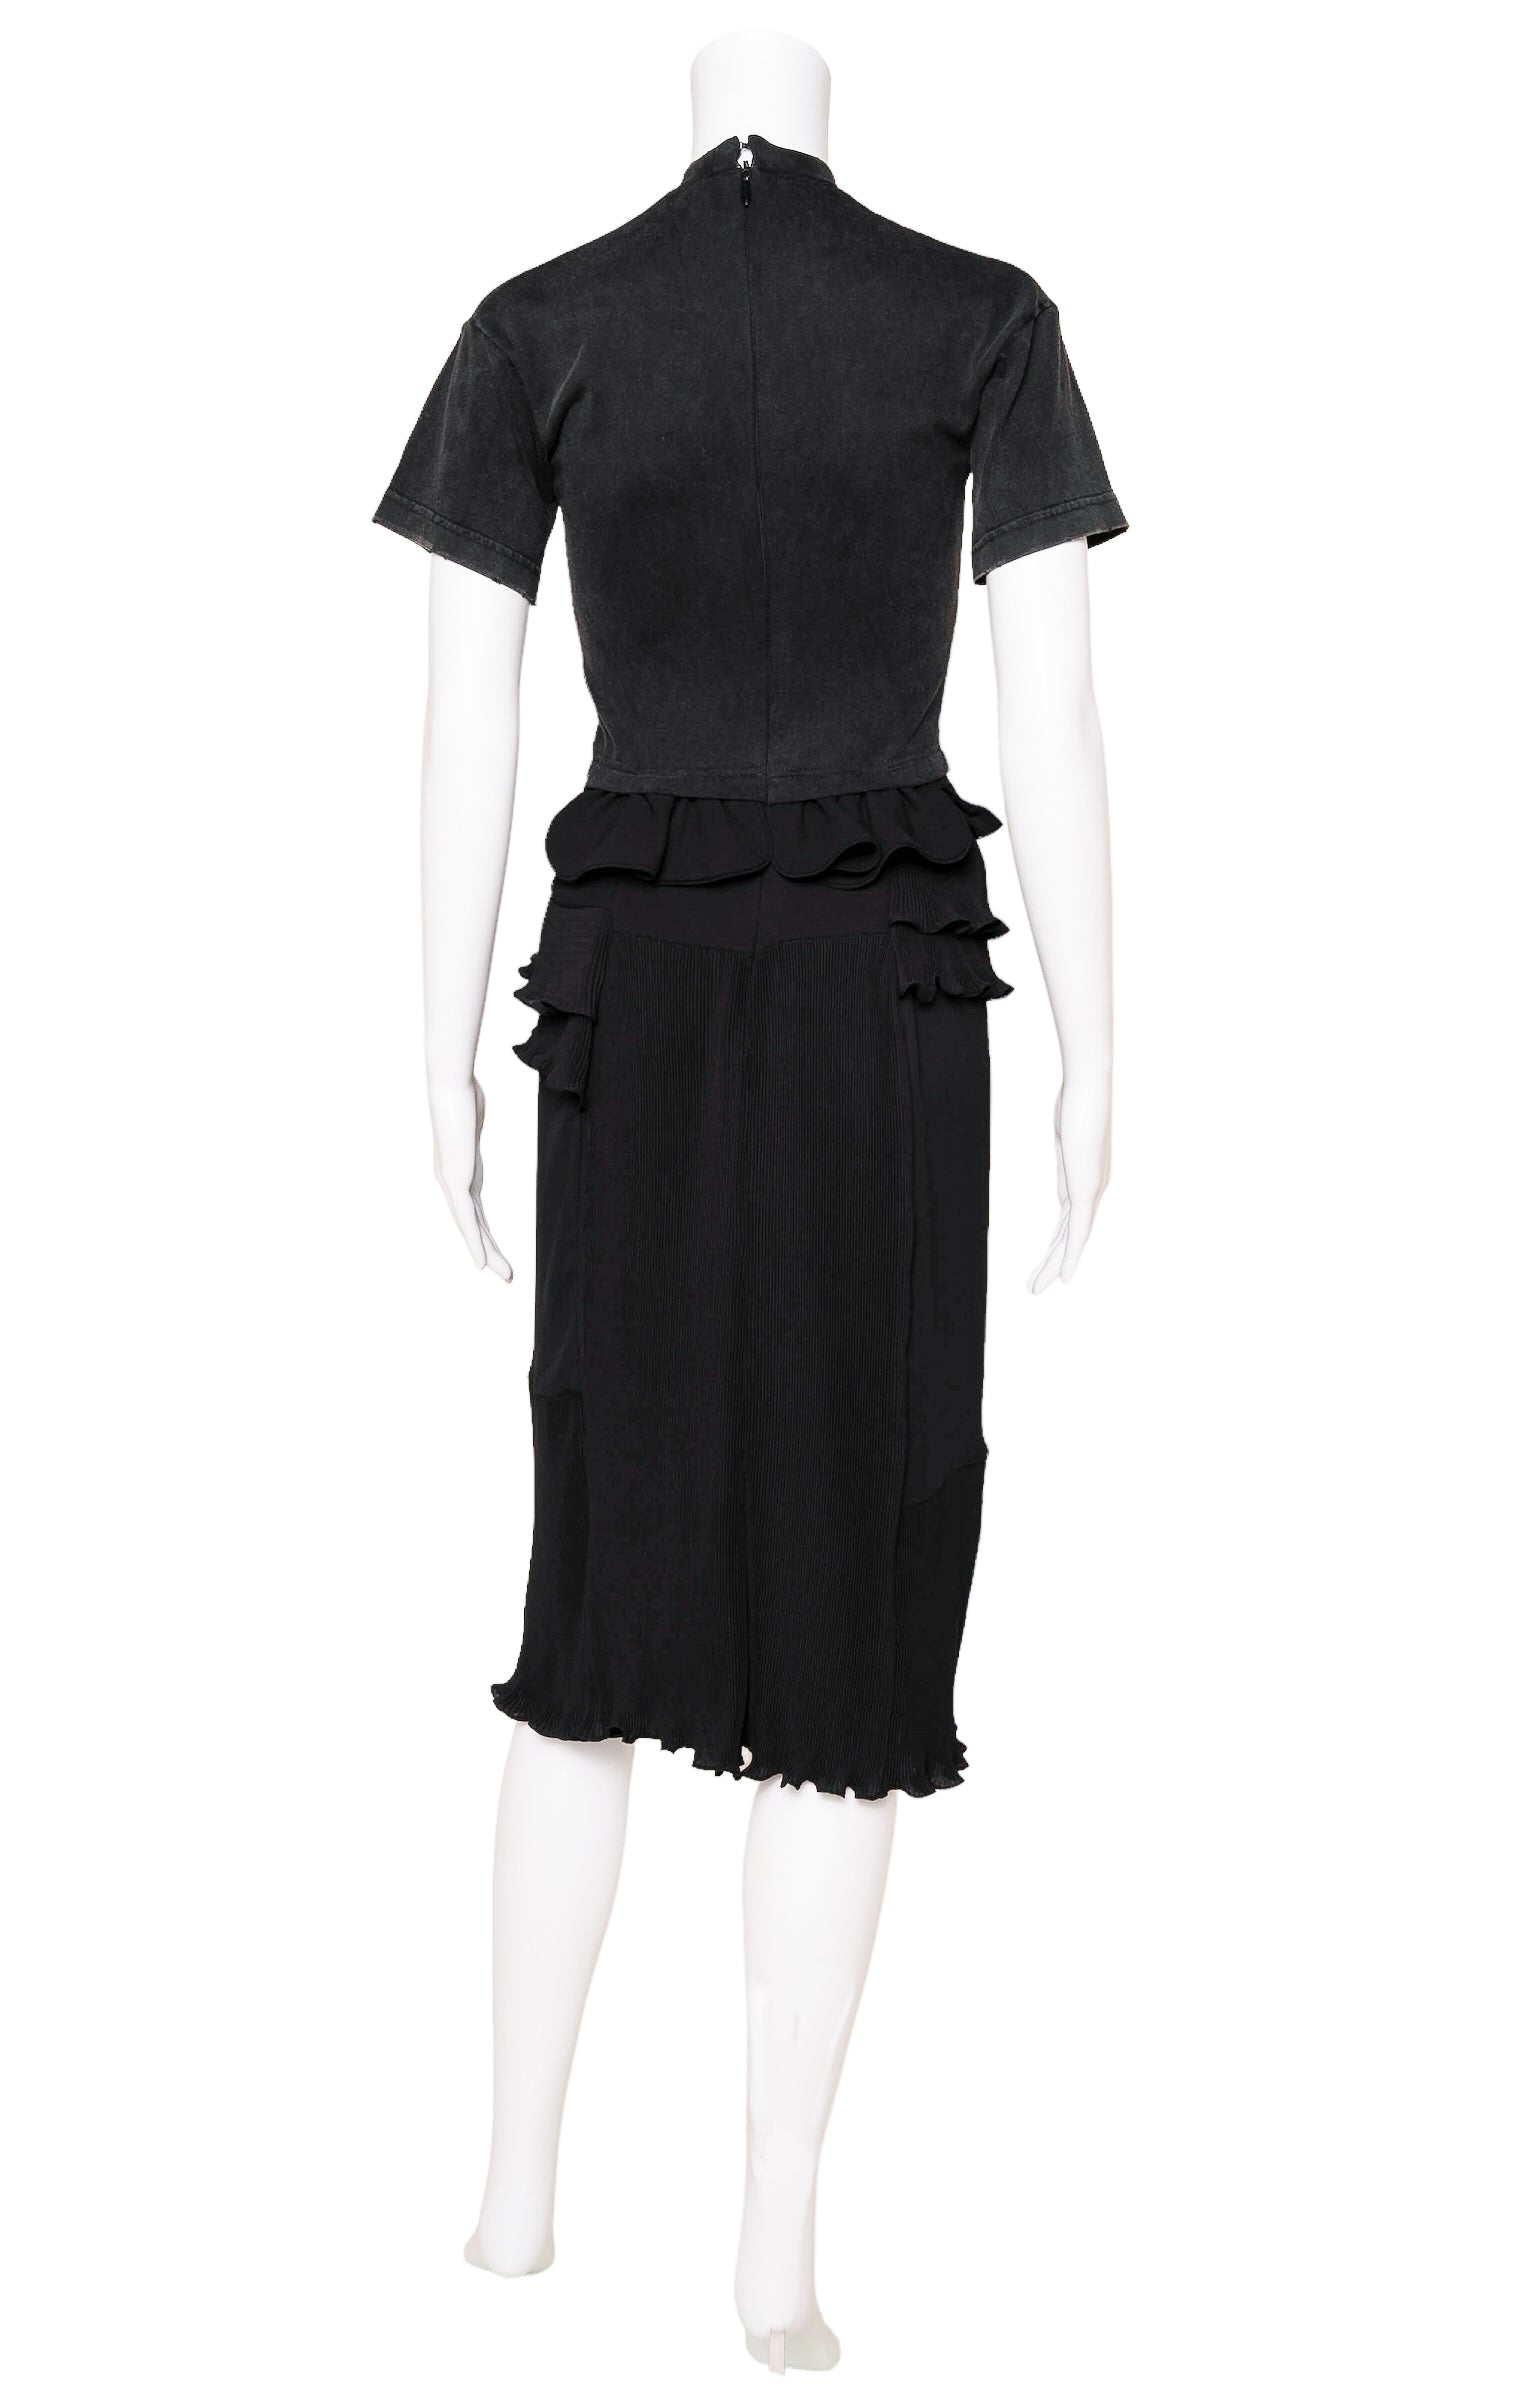 BALENCIAGA (RARE) Dress Size: No size tags, fits like XS